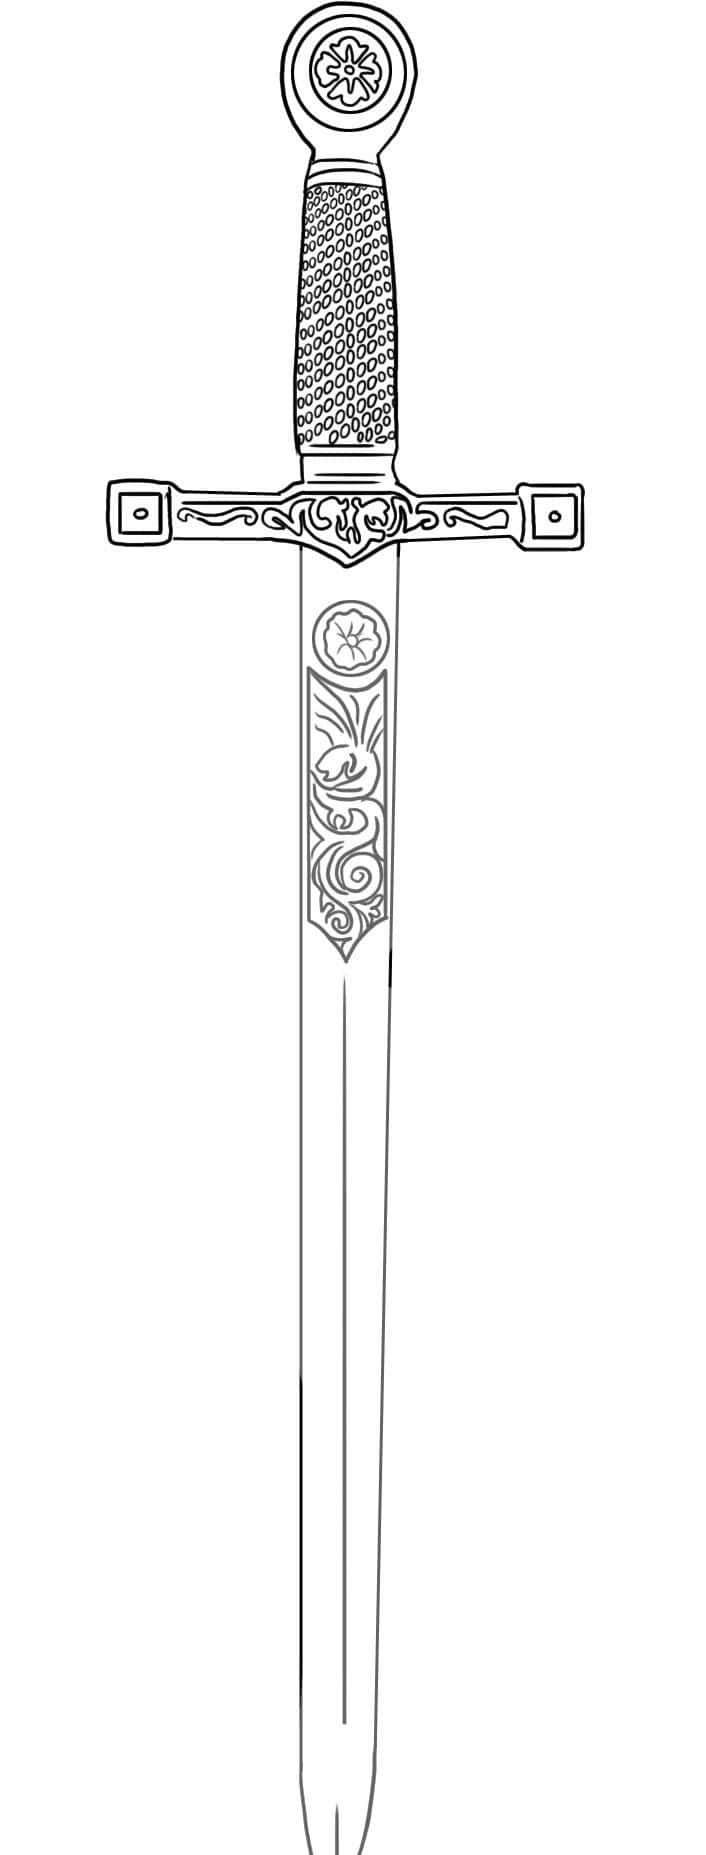 The Legendary Excalibur Sword in Stone Wallpaper